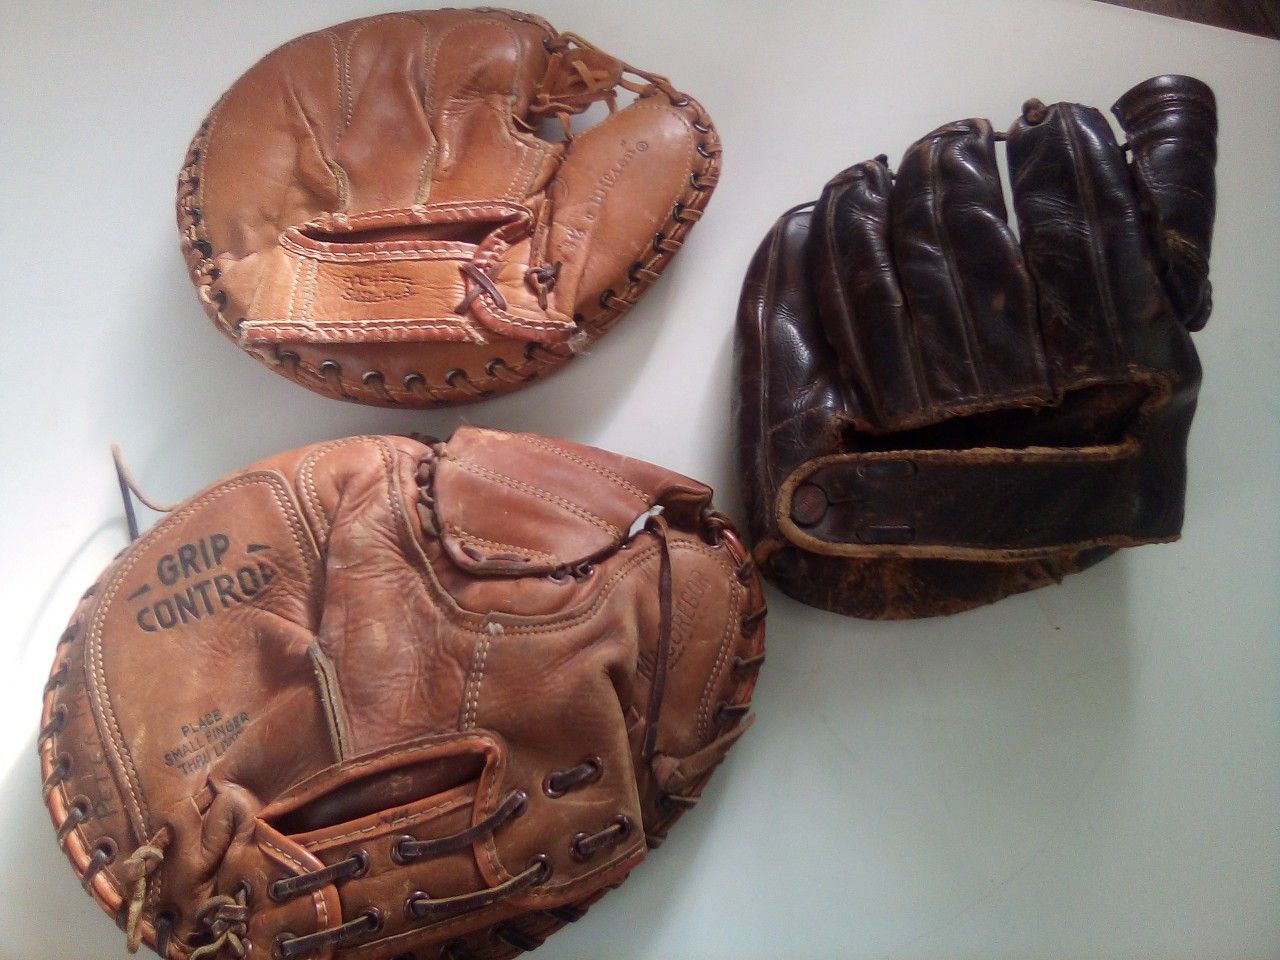 Three vintage baseball gloves sold all together